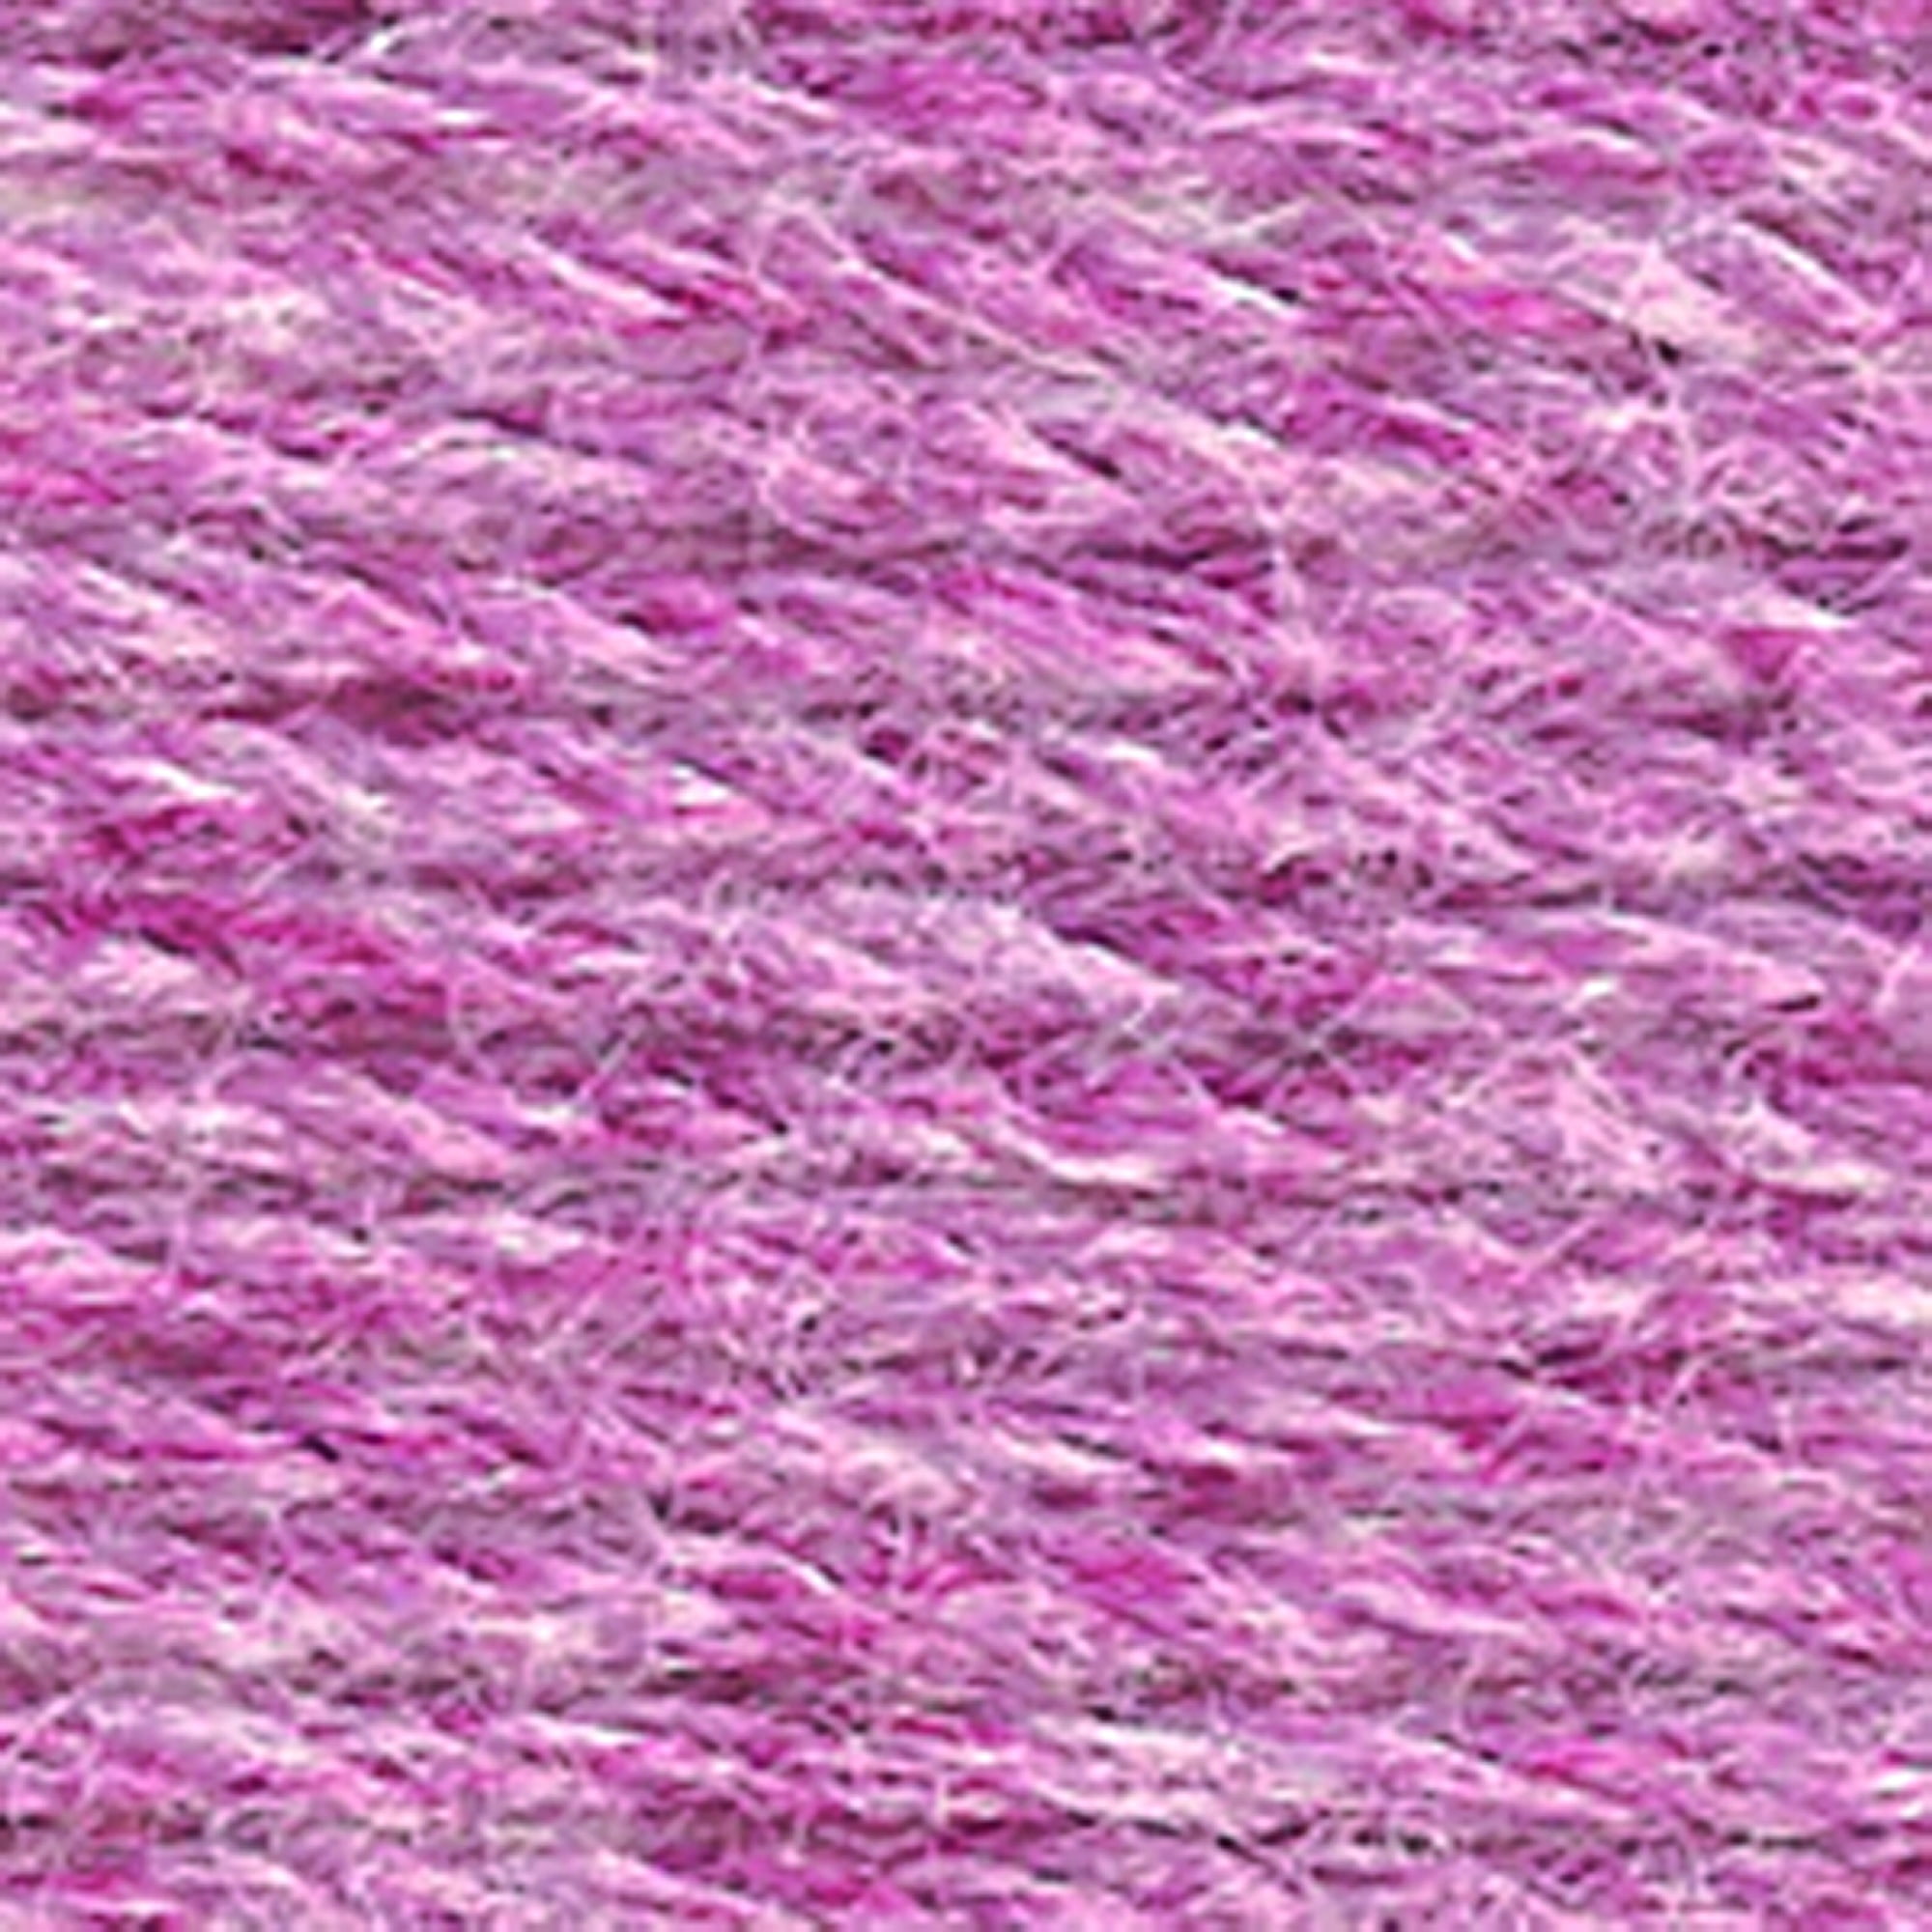  Lion Brand Wool Ease Yarn Rose Heather 620-140 (6